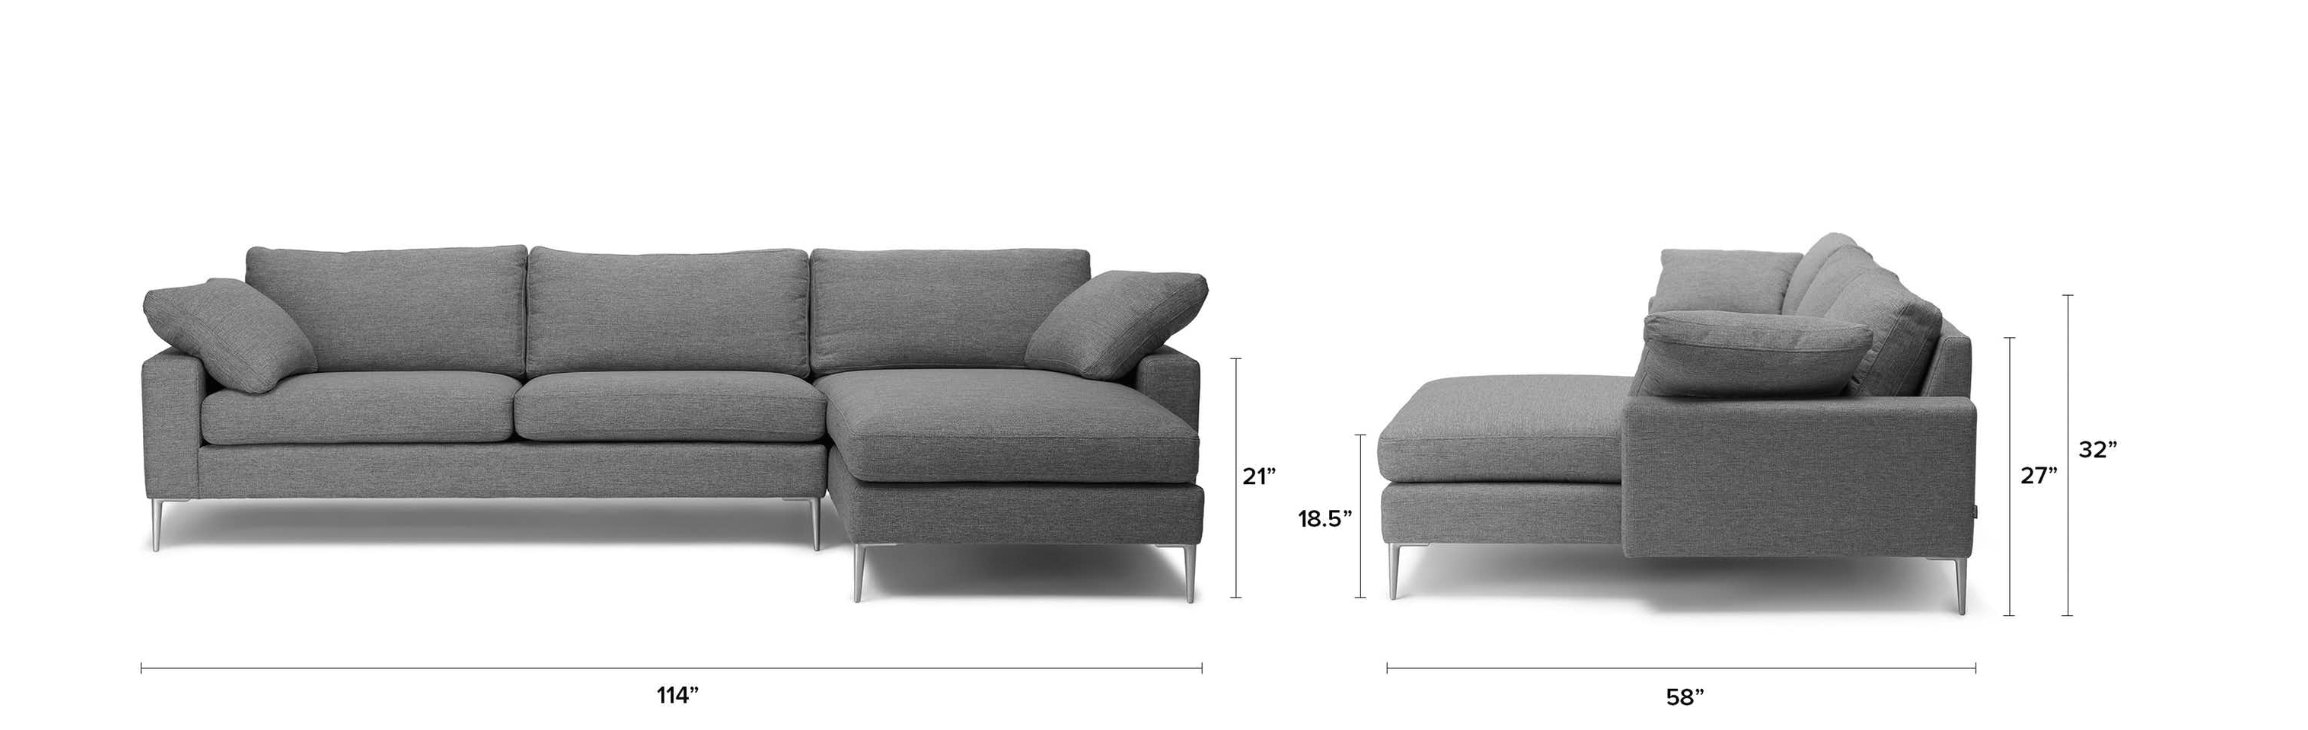 NOVA  - Gravel Gray sectional right chaise - Image 1